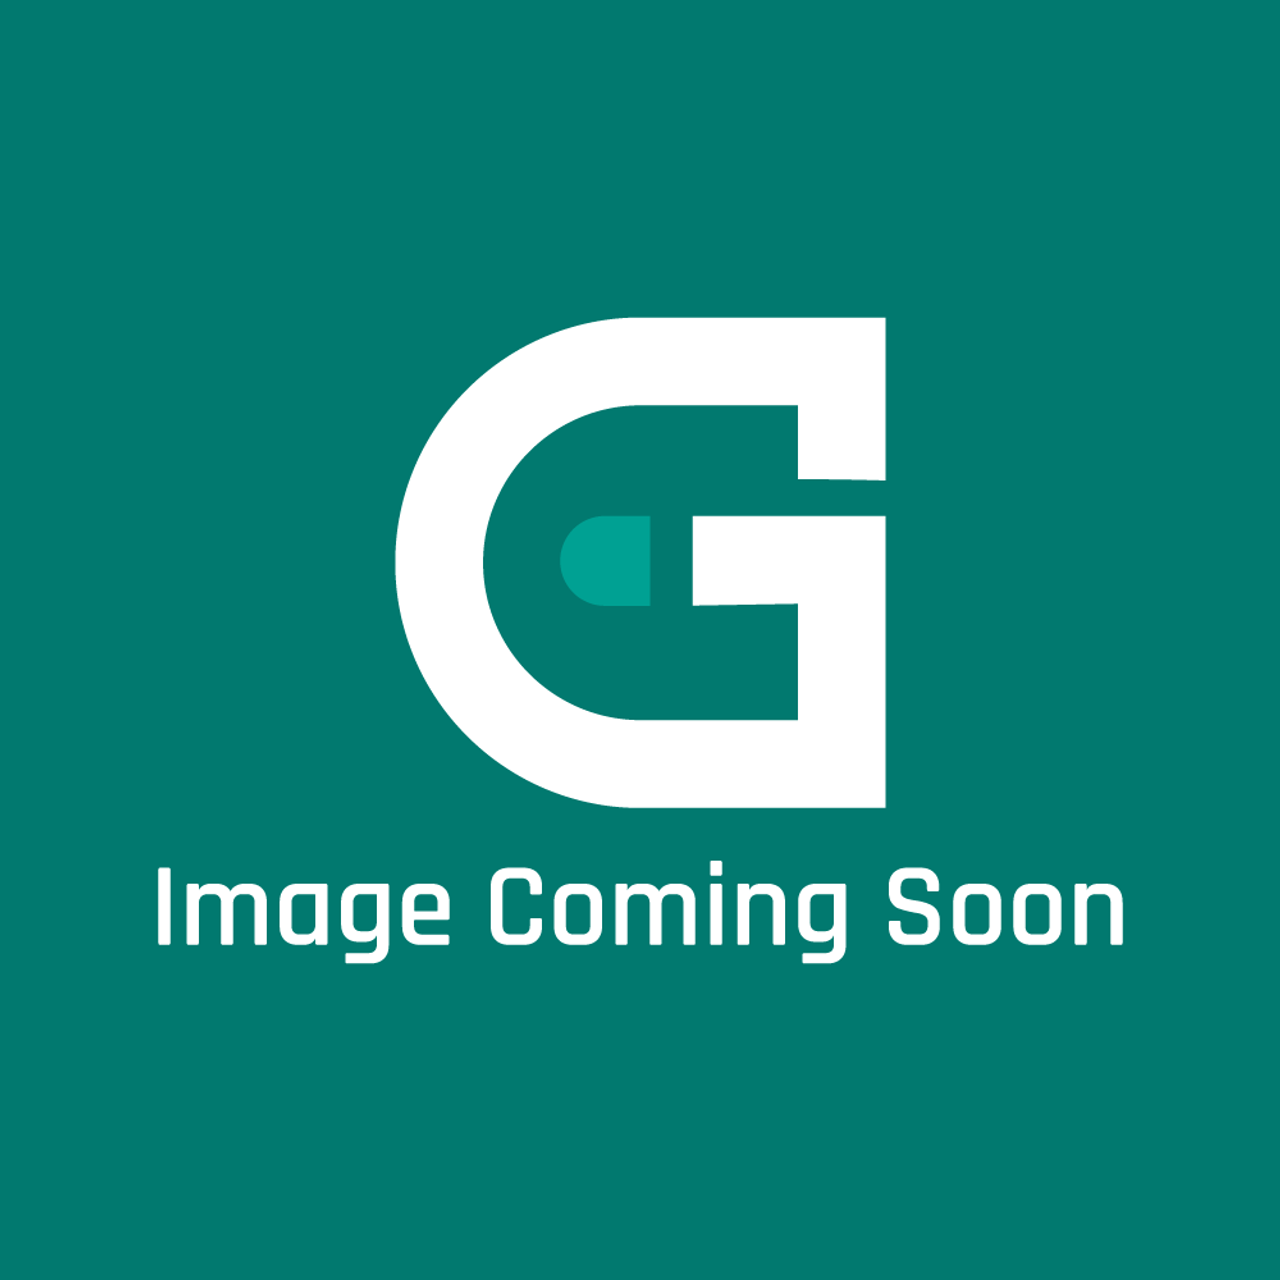 Groen 99207 - Drain Box Cover Assy - Image Coming Soon!